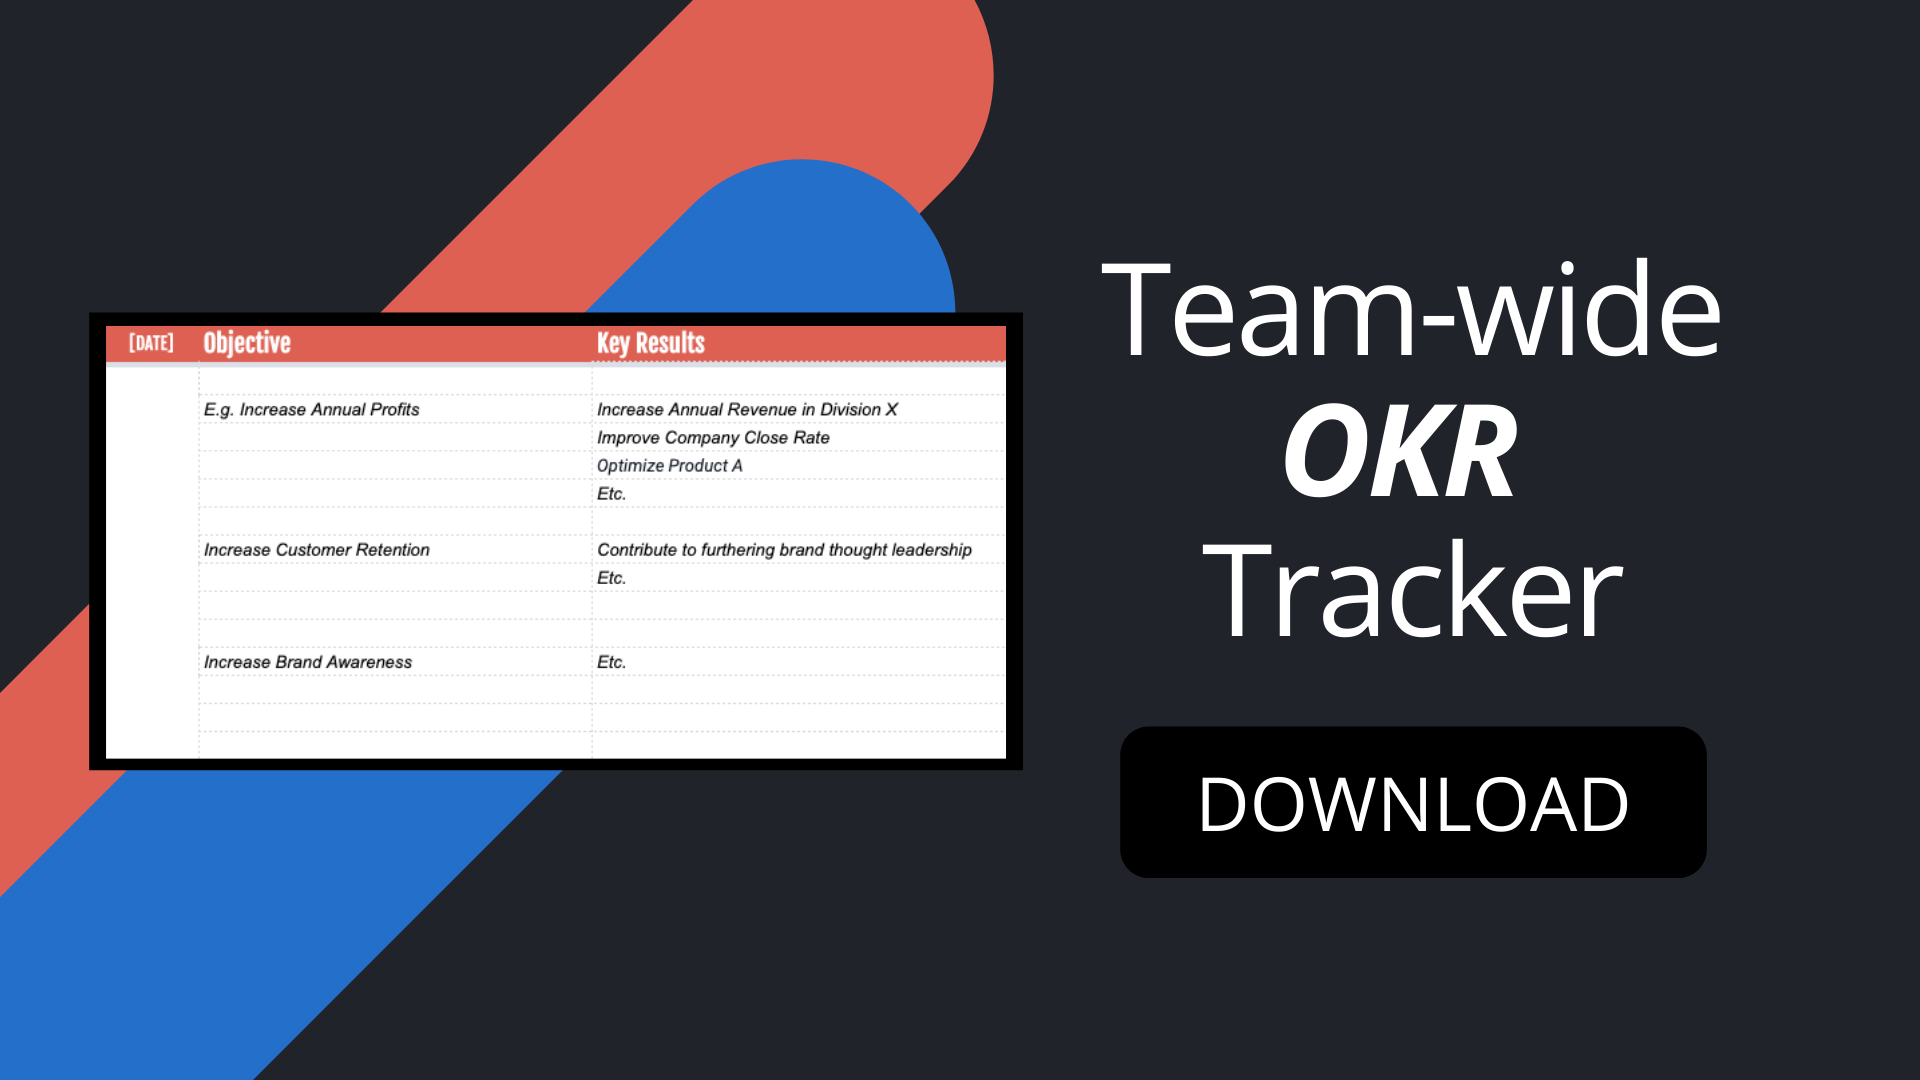 Download team-wide OKR tracker